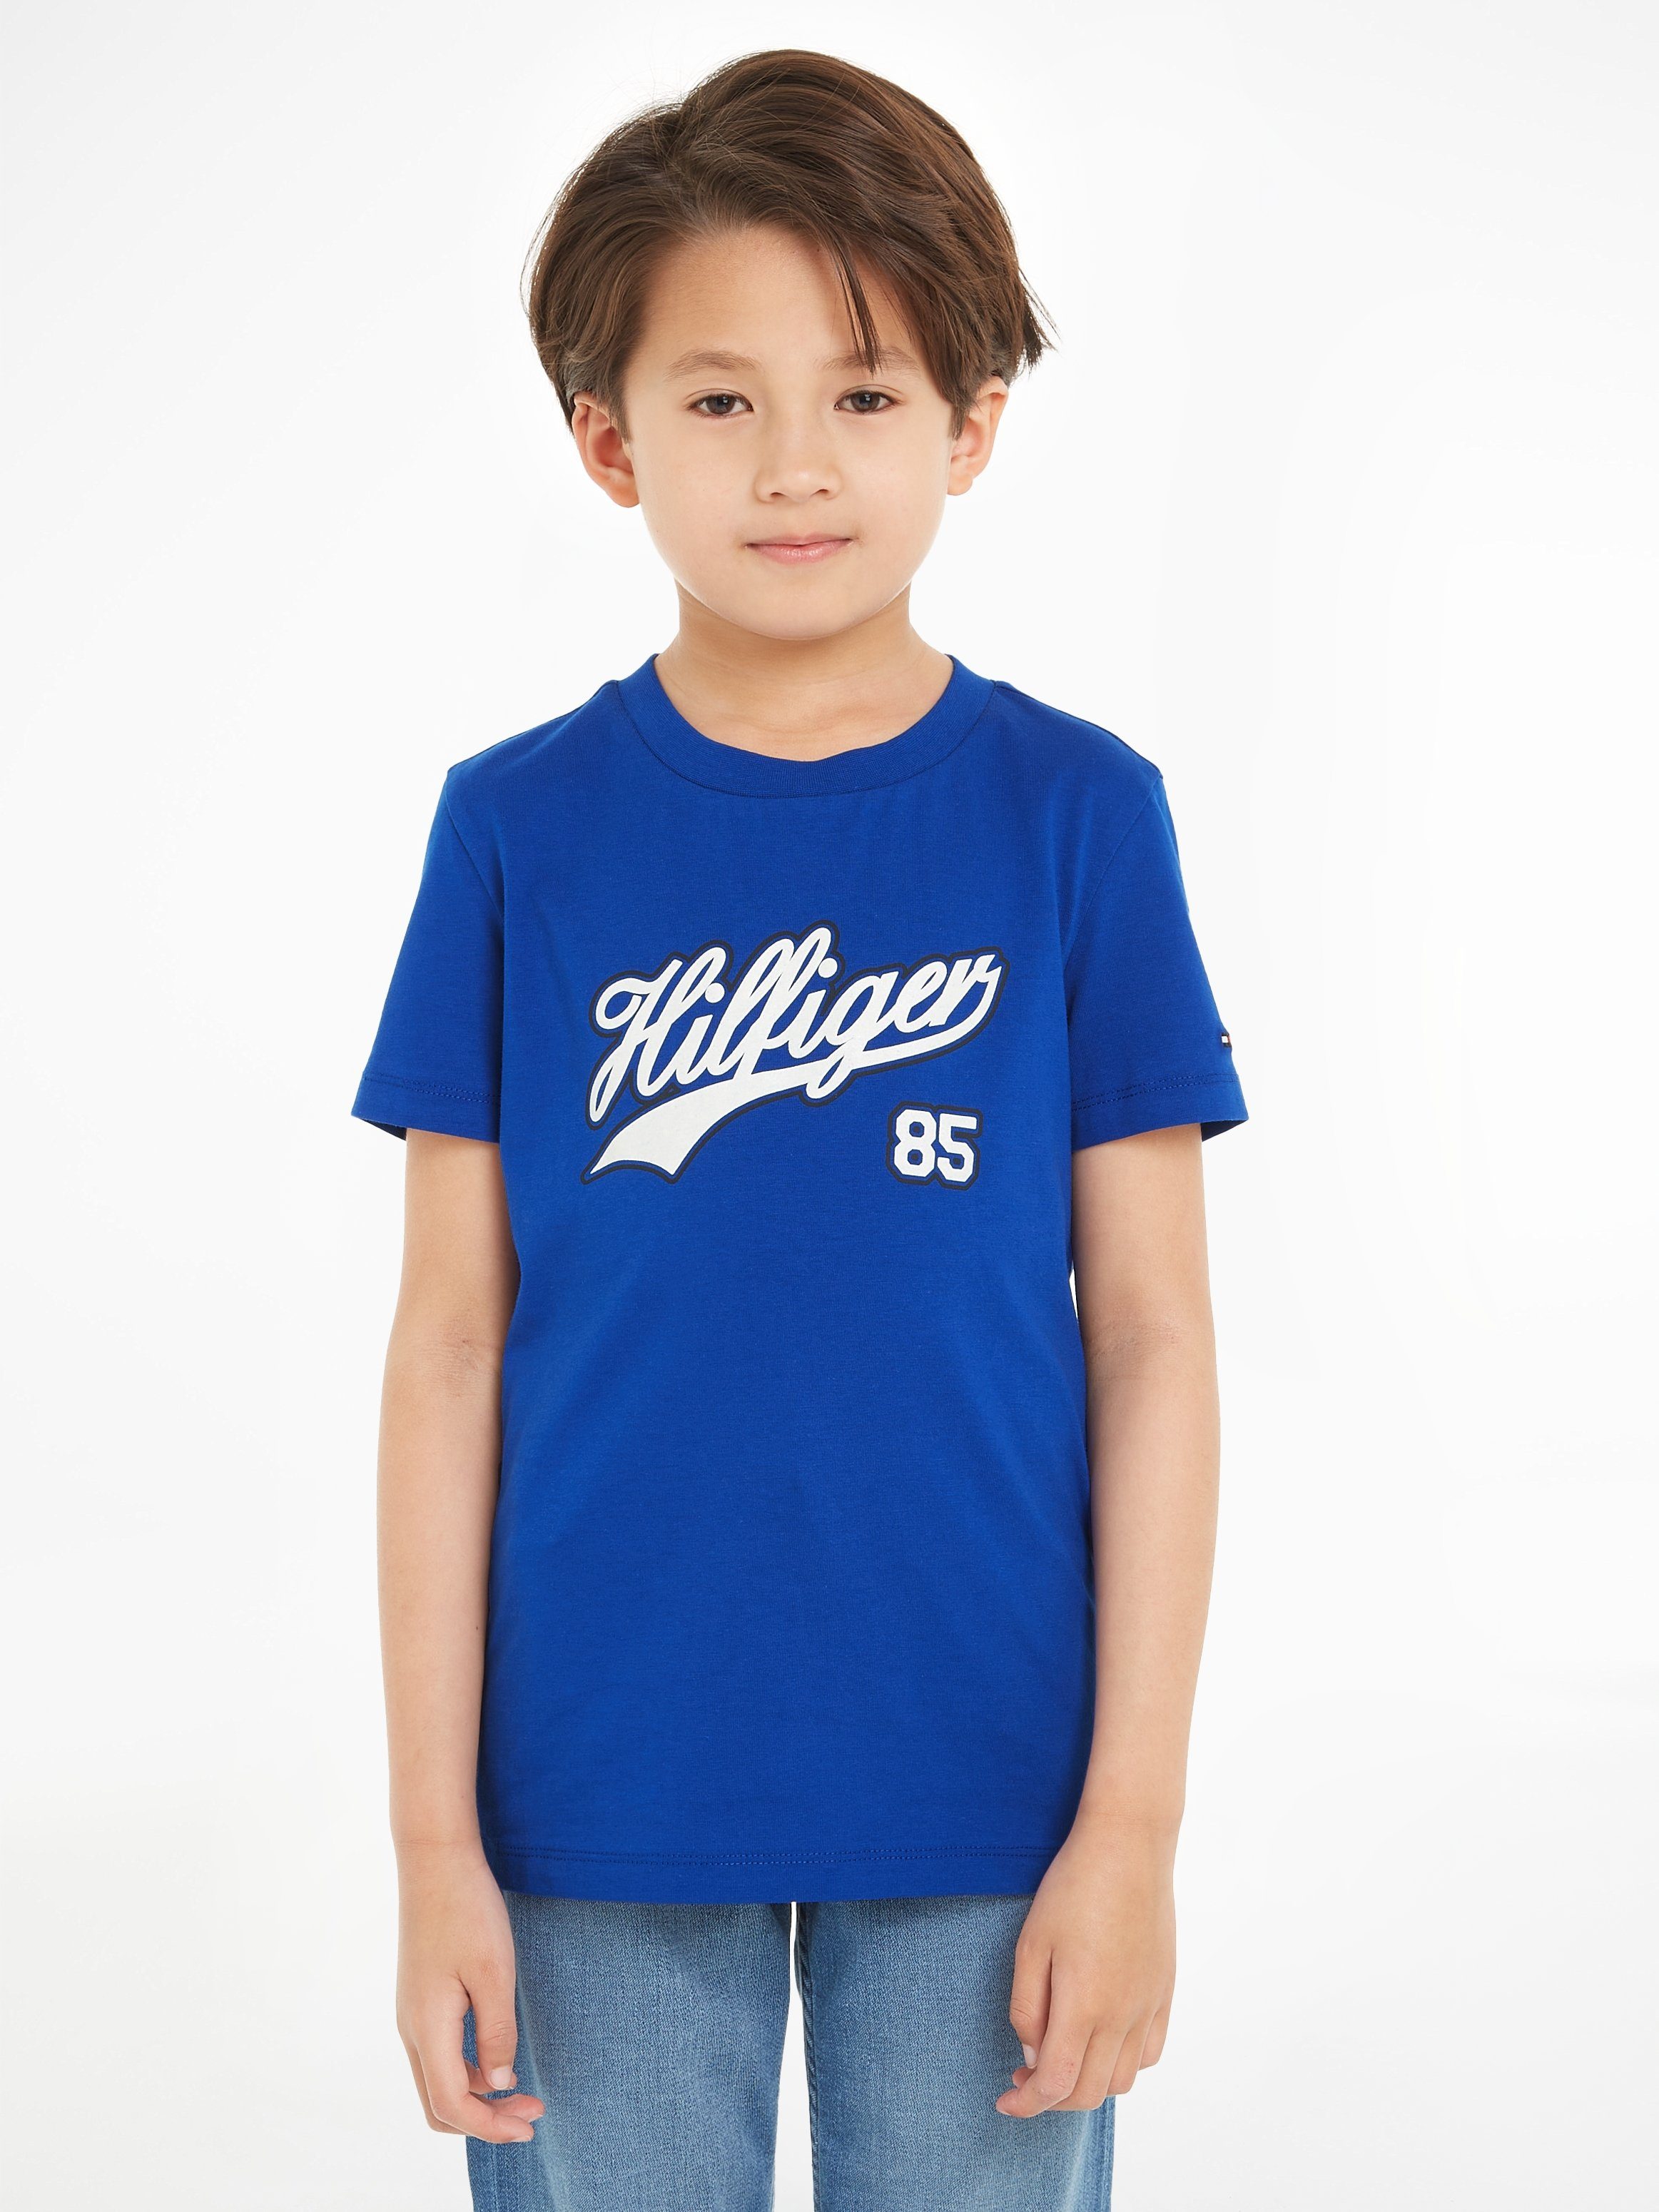 Tommy Hilfiger S/S TEE mit großem Logoschriftzug T-Shirt SCRIPT HILFIGER